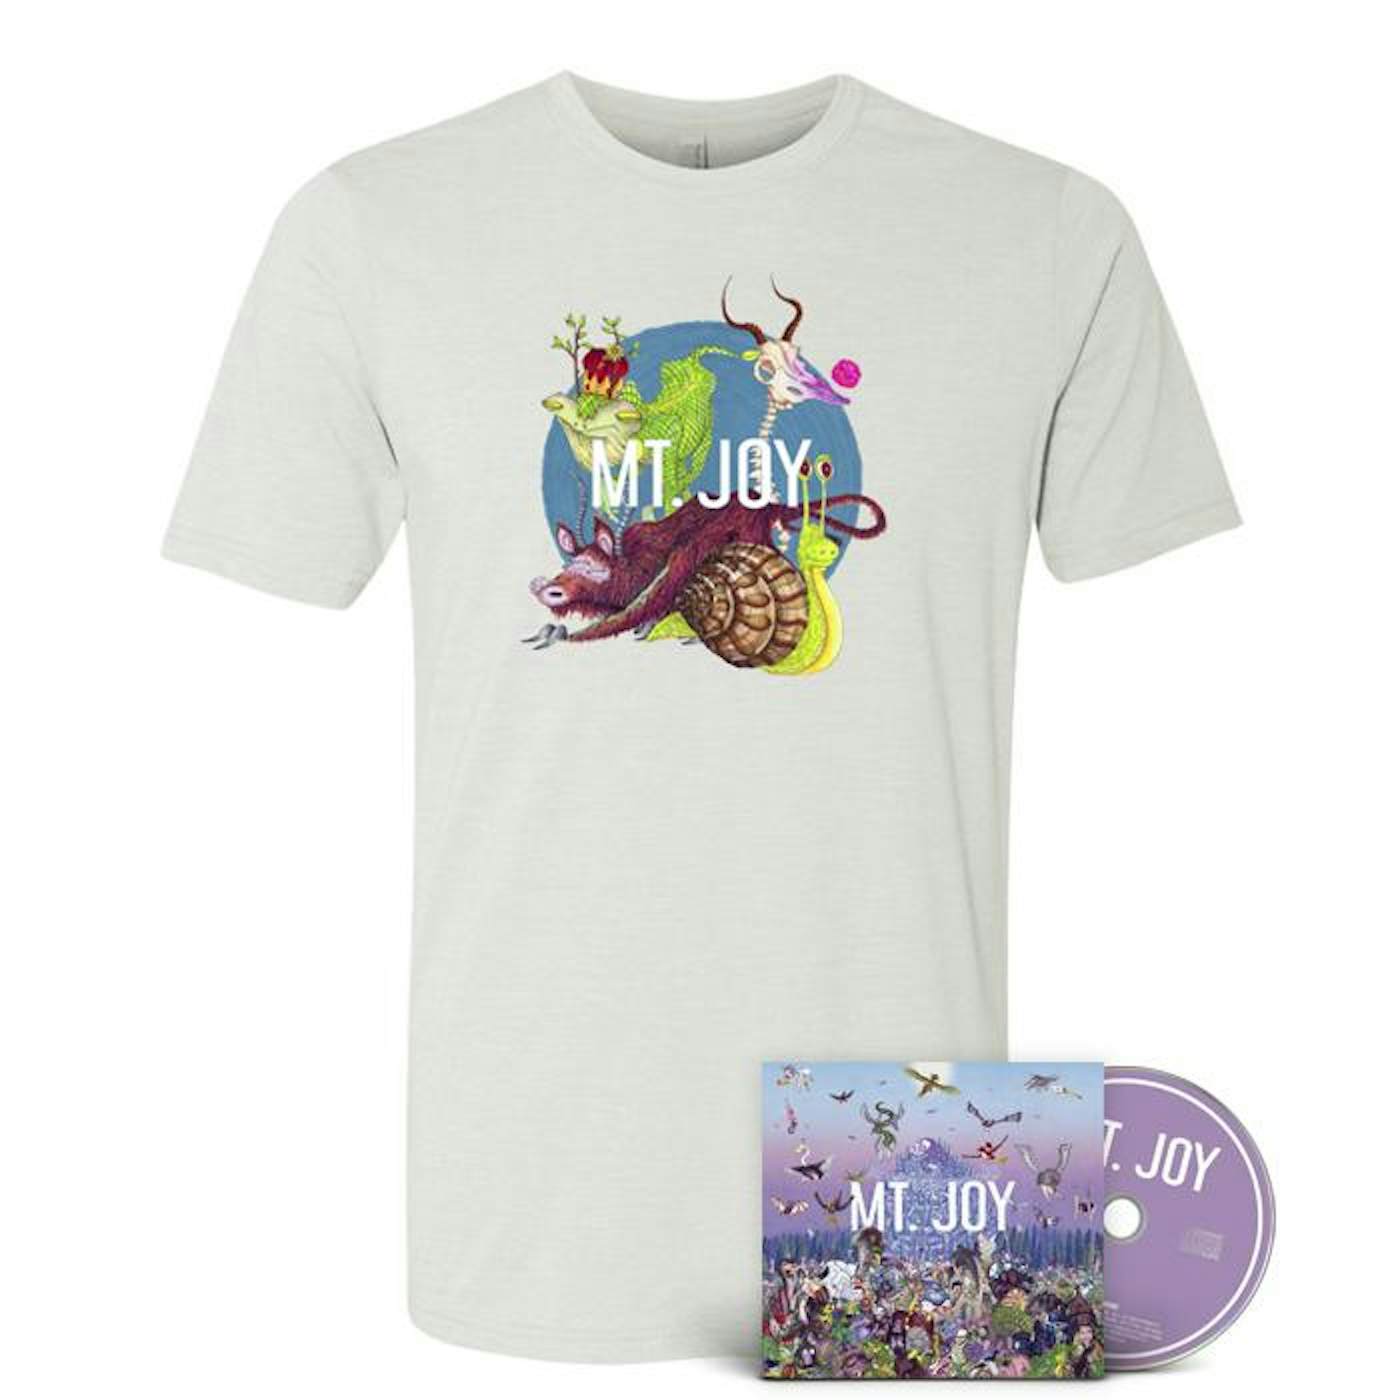 Mt. Joy Rearrange Us (Shirt + CD)